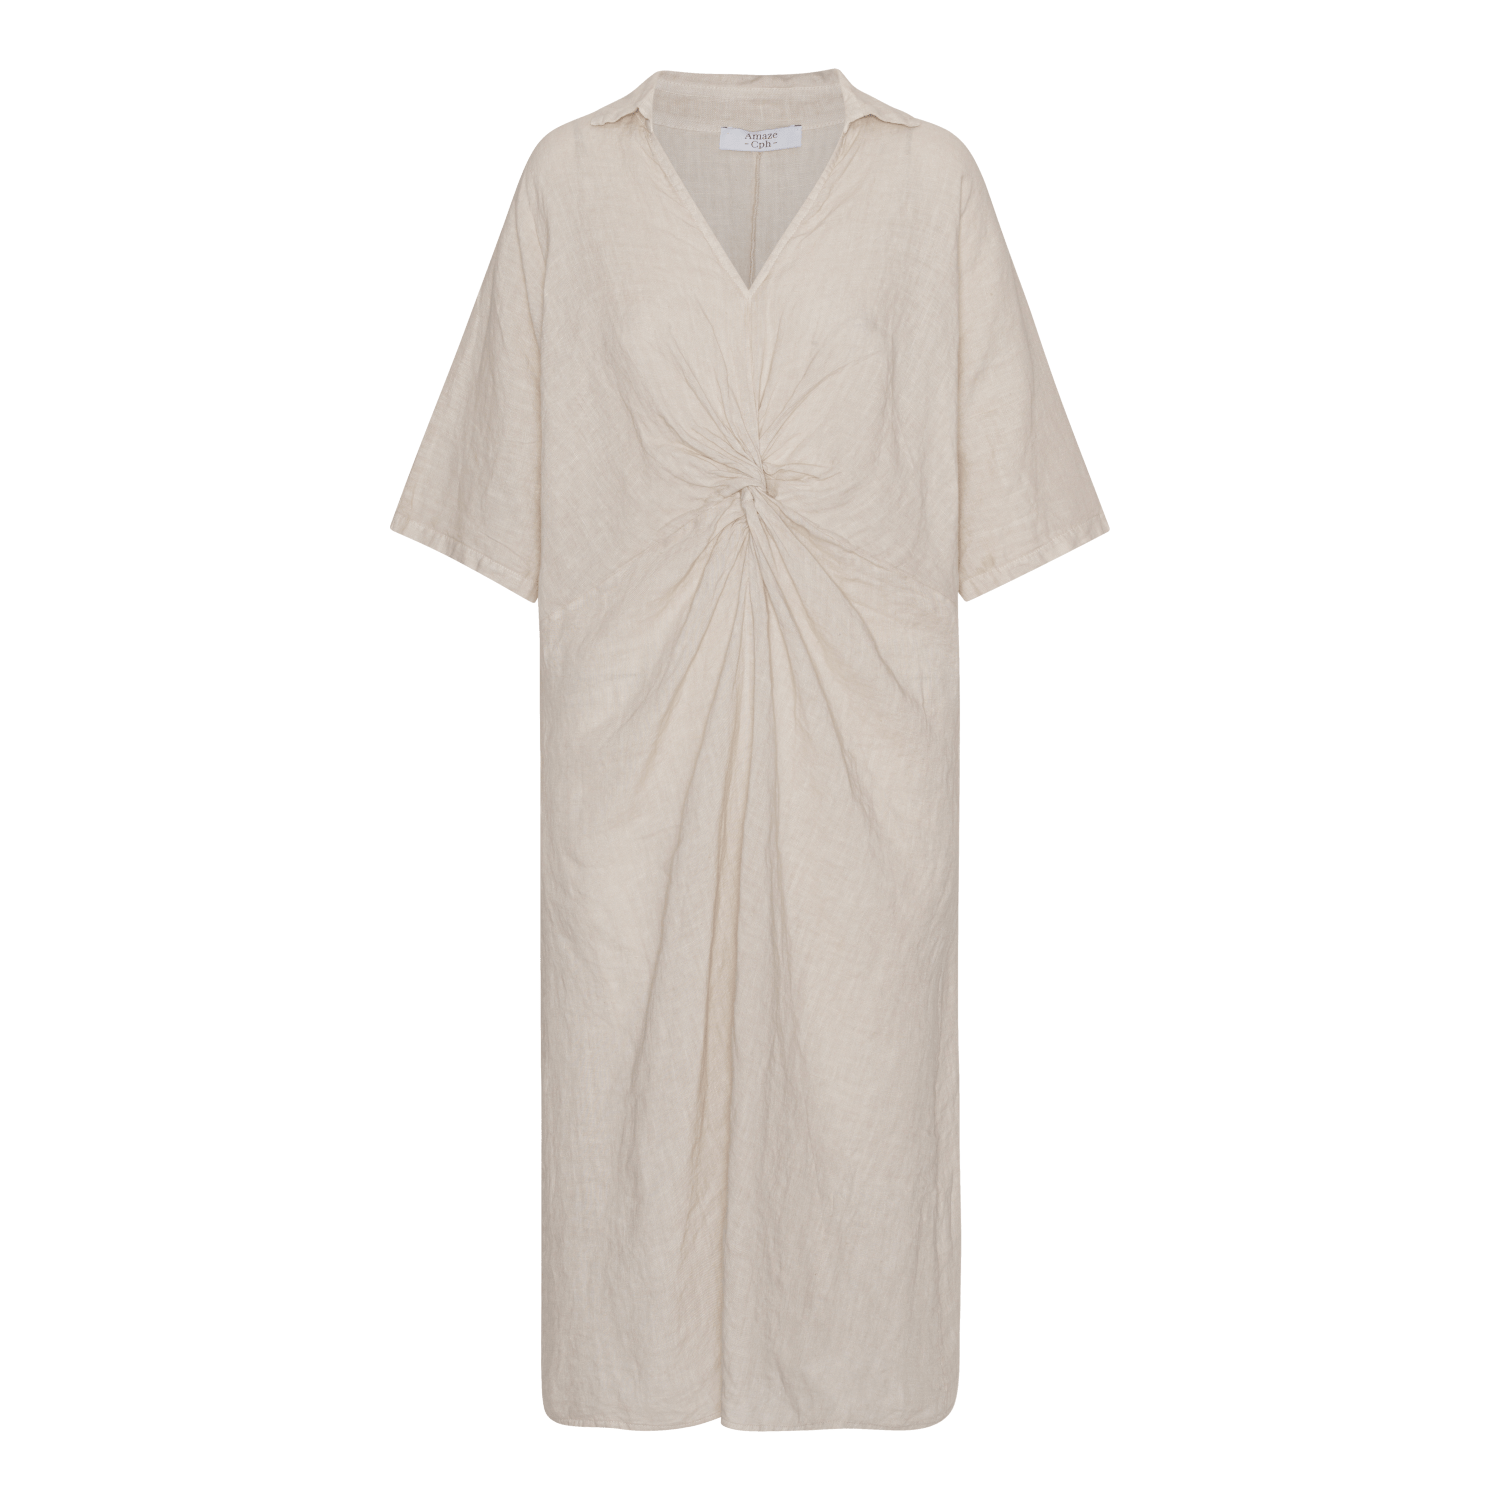 Linen Twist Dress - Sand - Amaze Cph - Sand - S/M